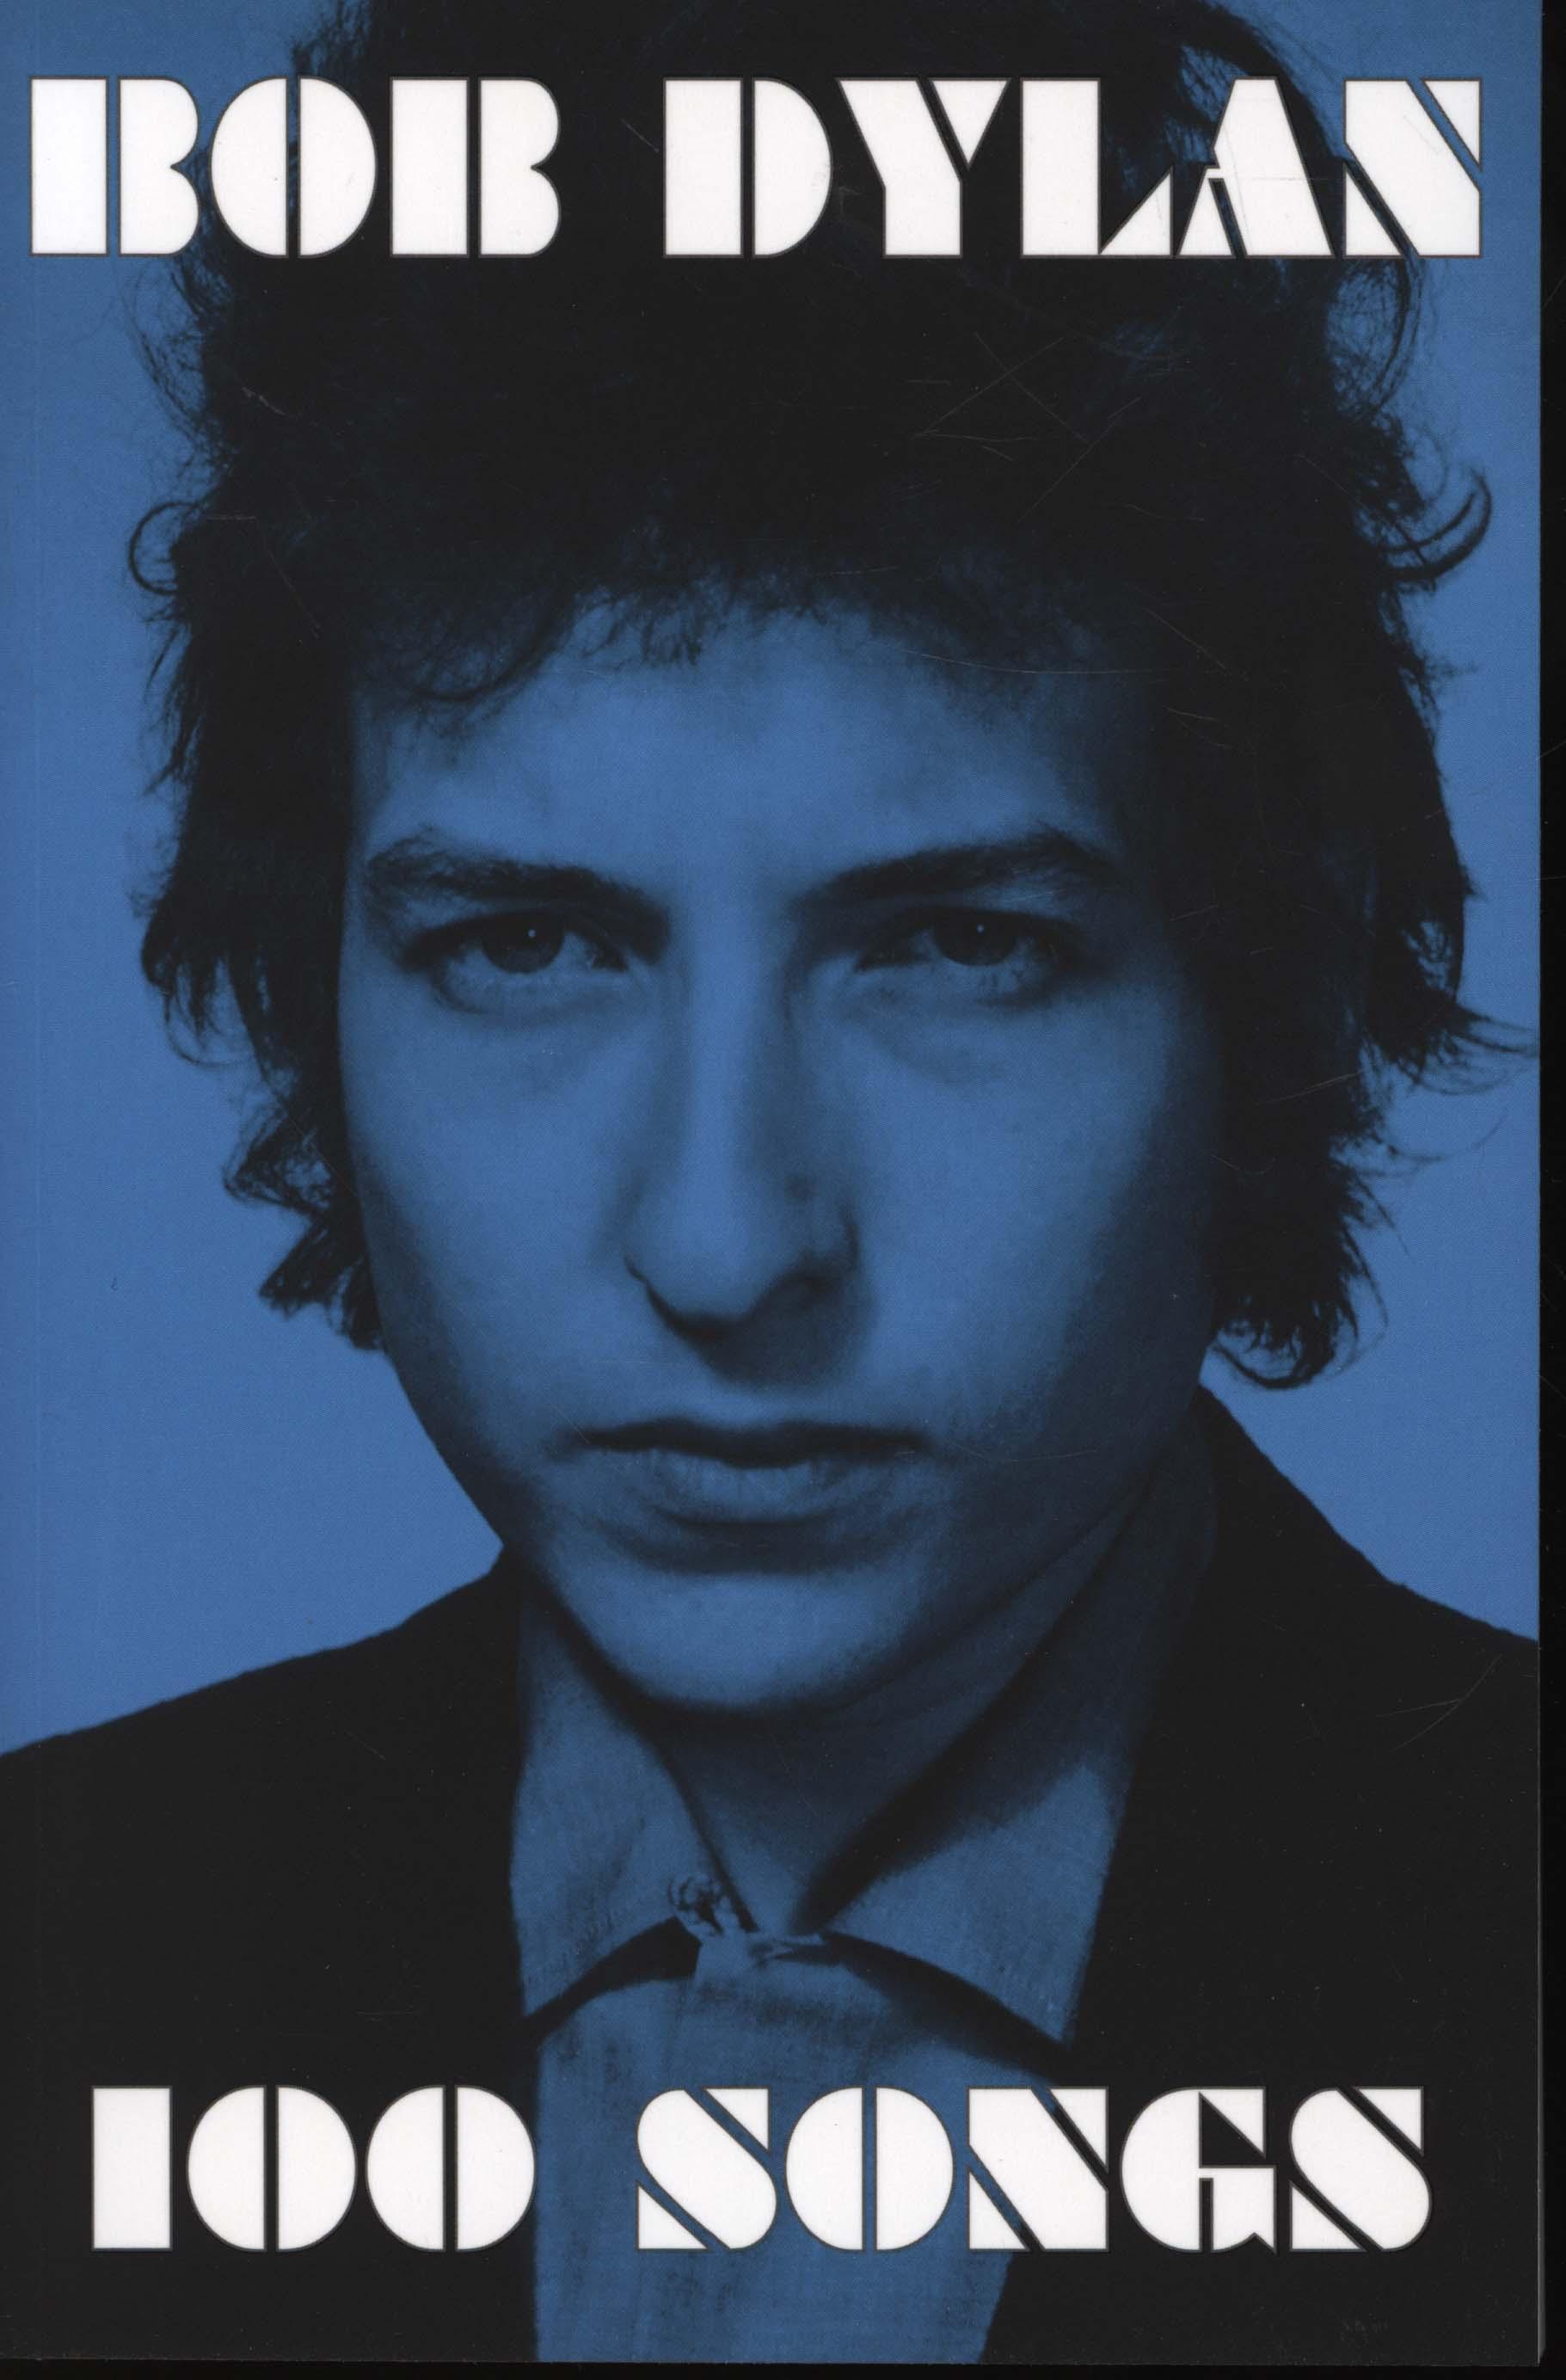 100 Songs - Bob Dylan